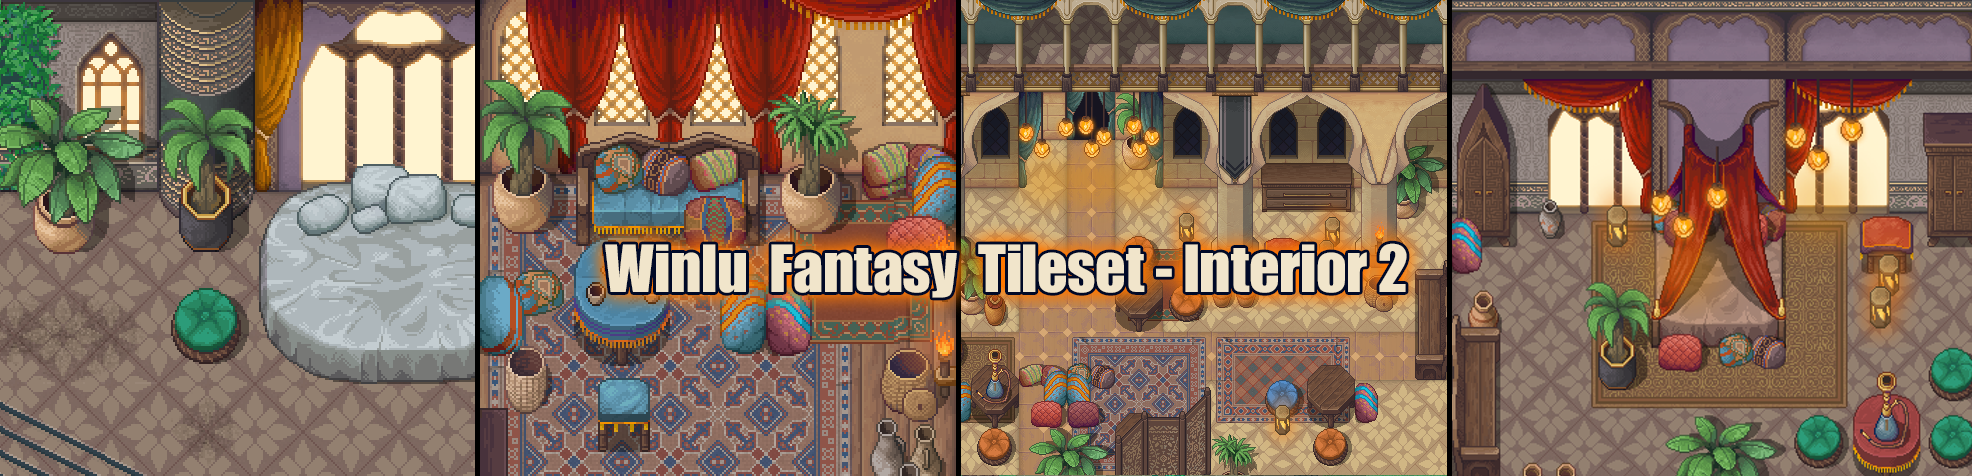 Winlu Fantasy Tileset - Interior 2